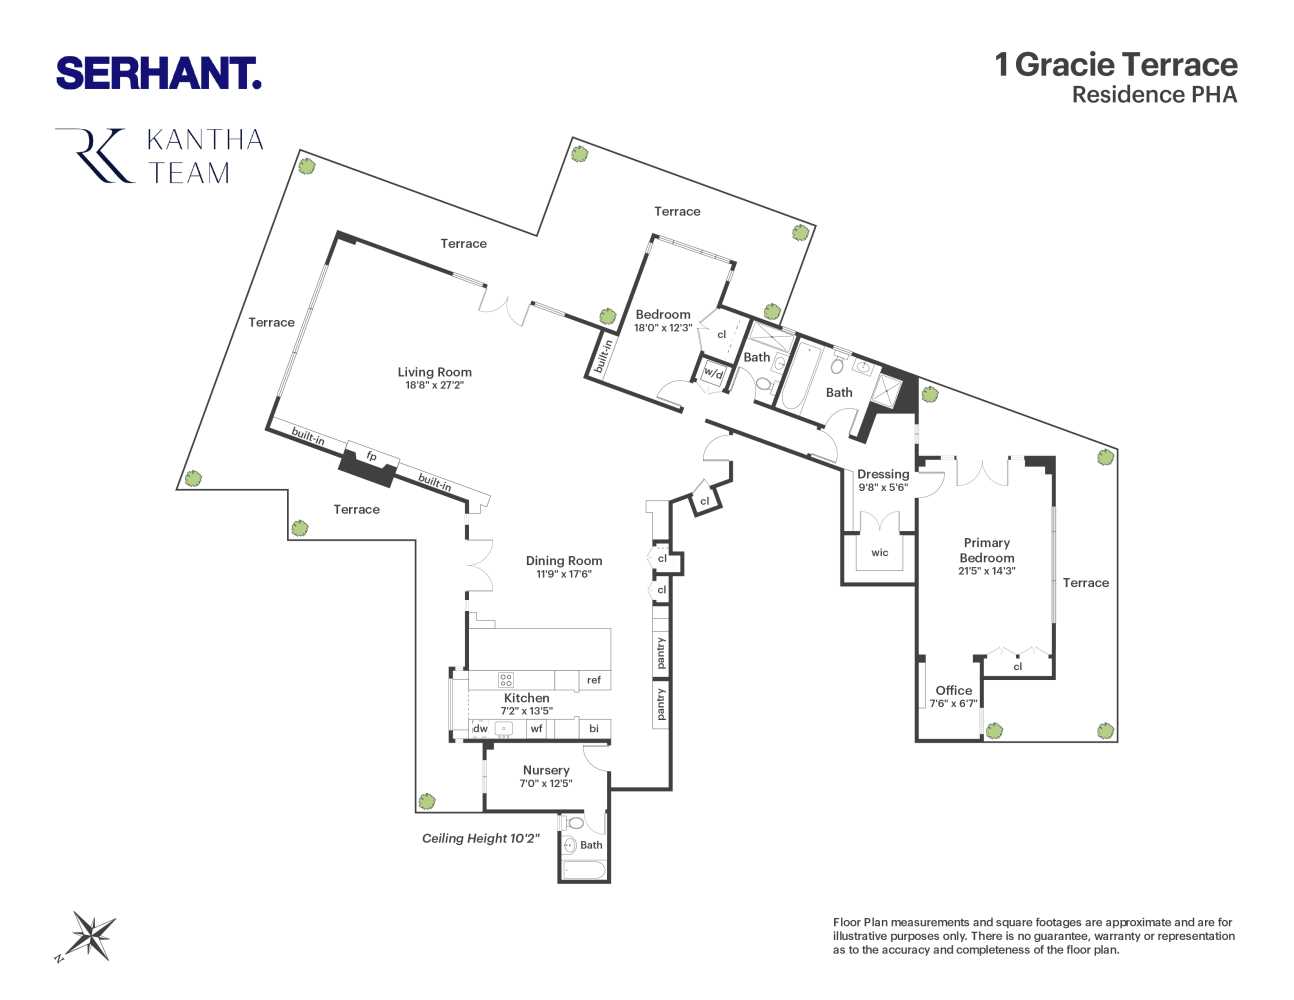 Floorplan for 1 Gracie Terrace, PHA